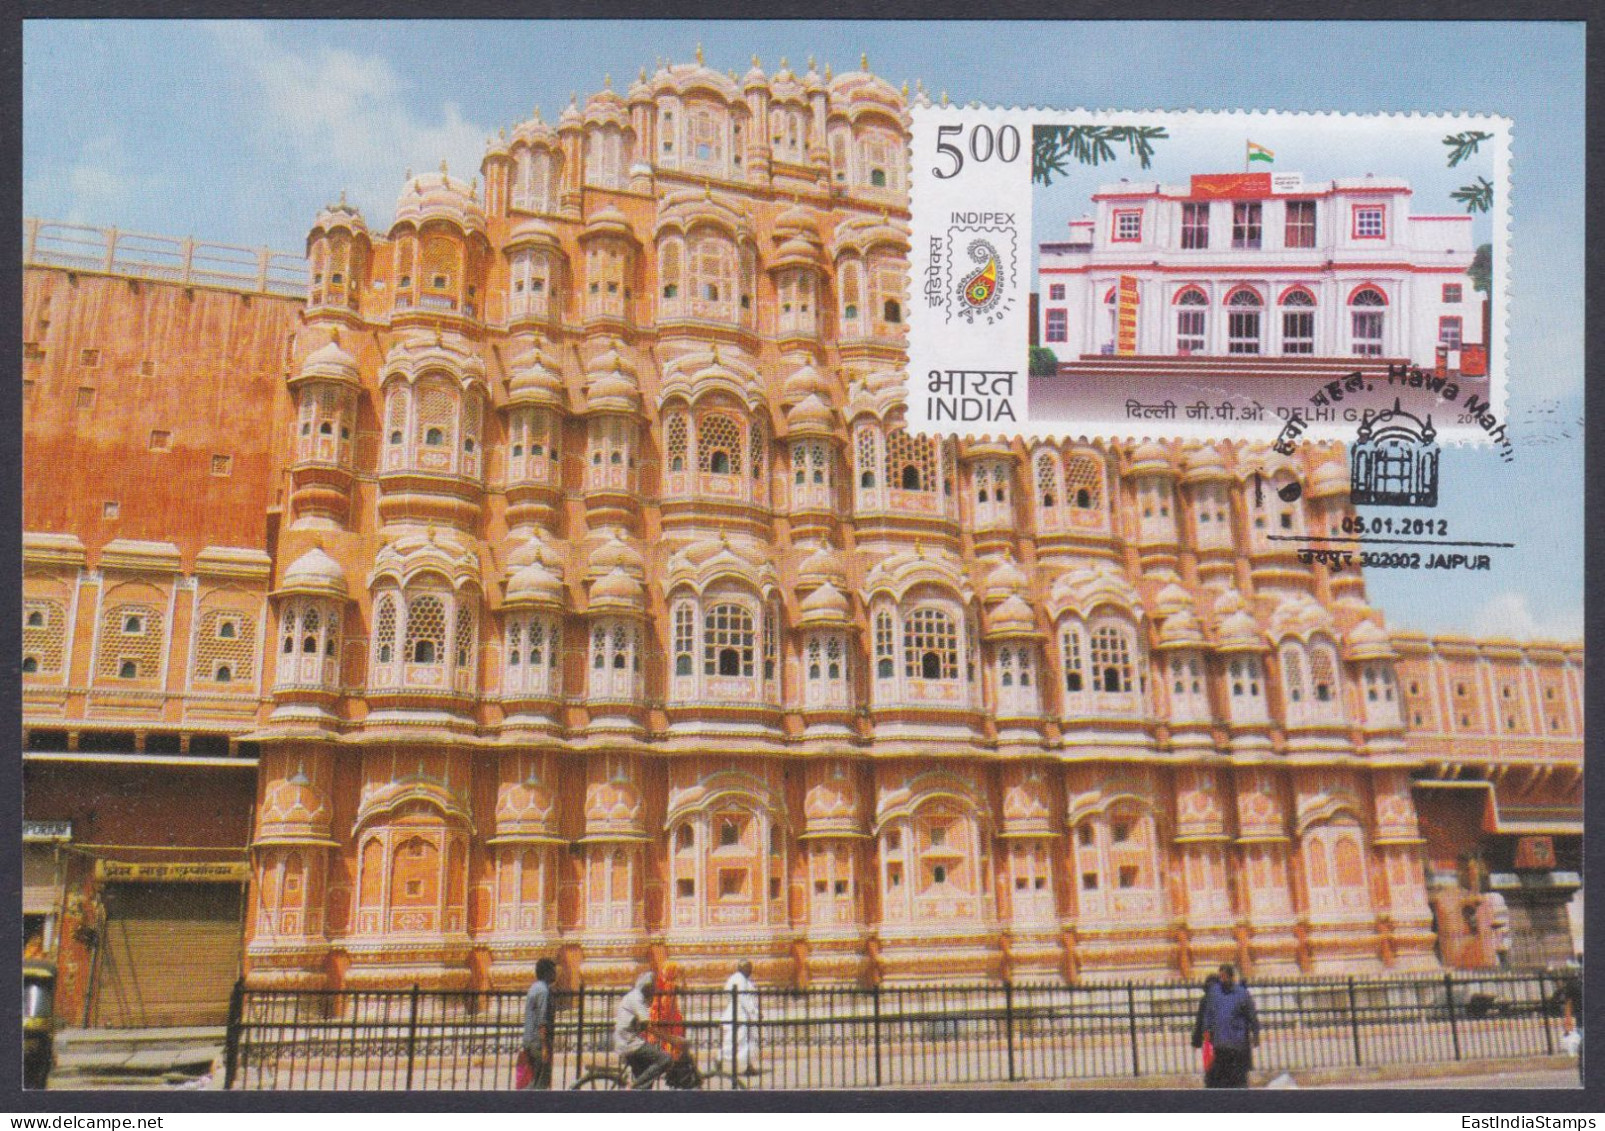 Inde India 2012 Maximum Card Hawa Mahal, Jaipur, Delhi G.P.O, Architecture, Rajput, Building, Medieval History, Max Card - Covers & Documents